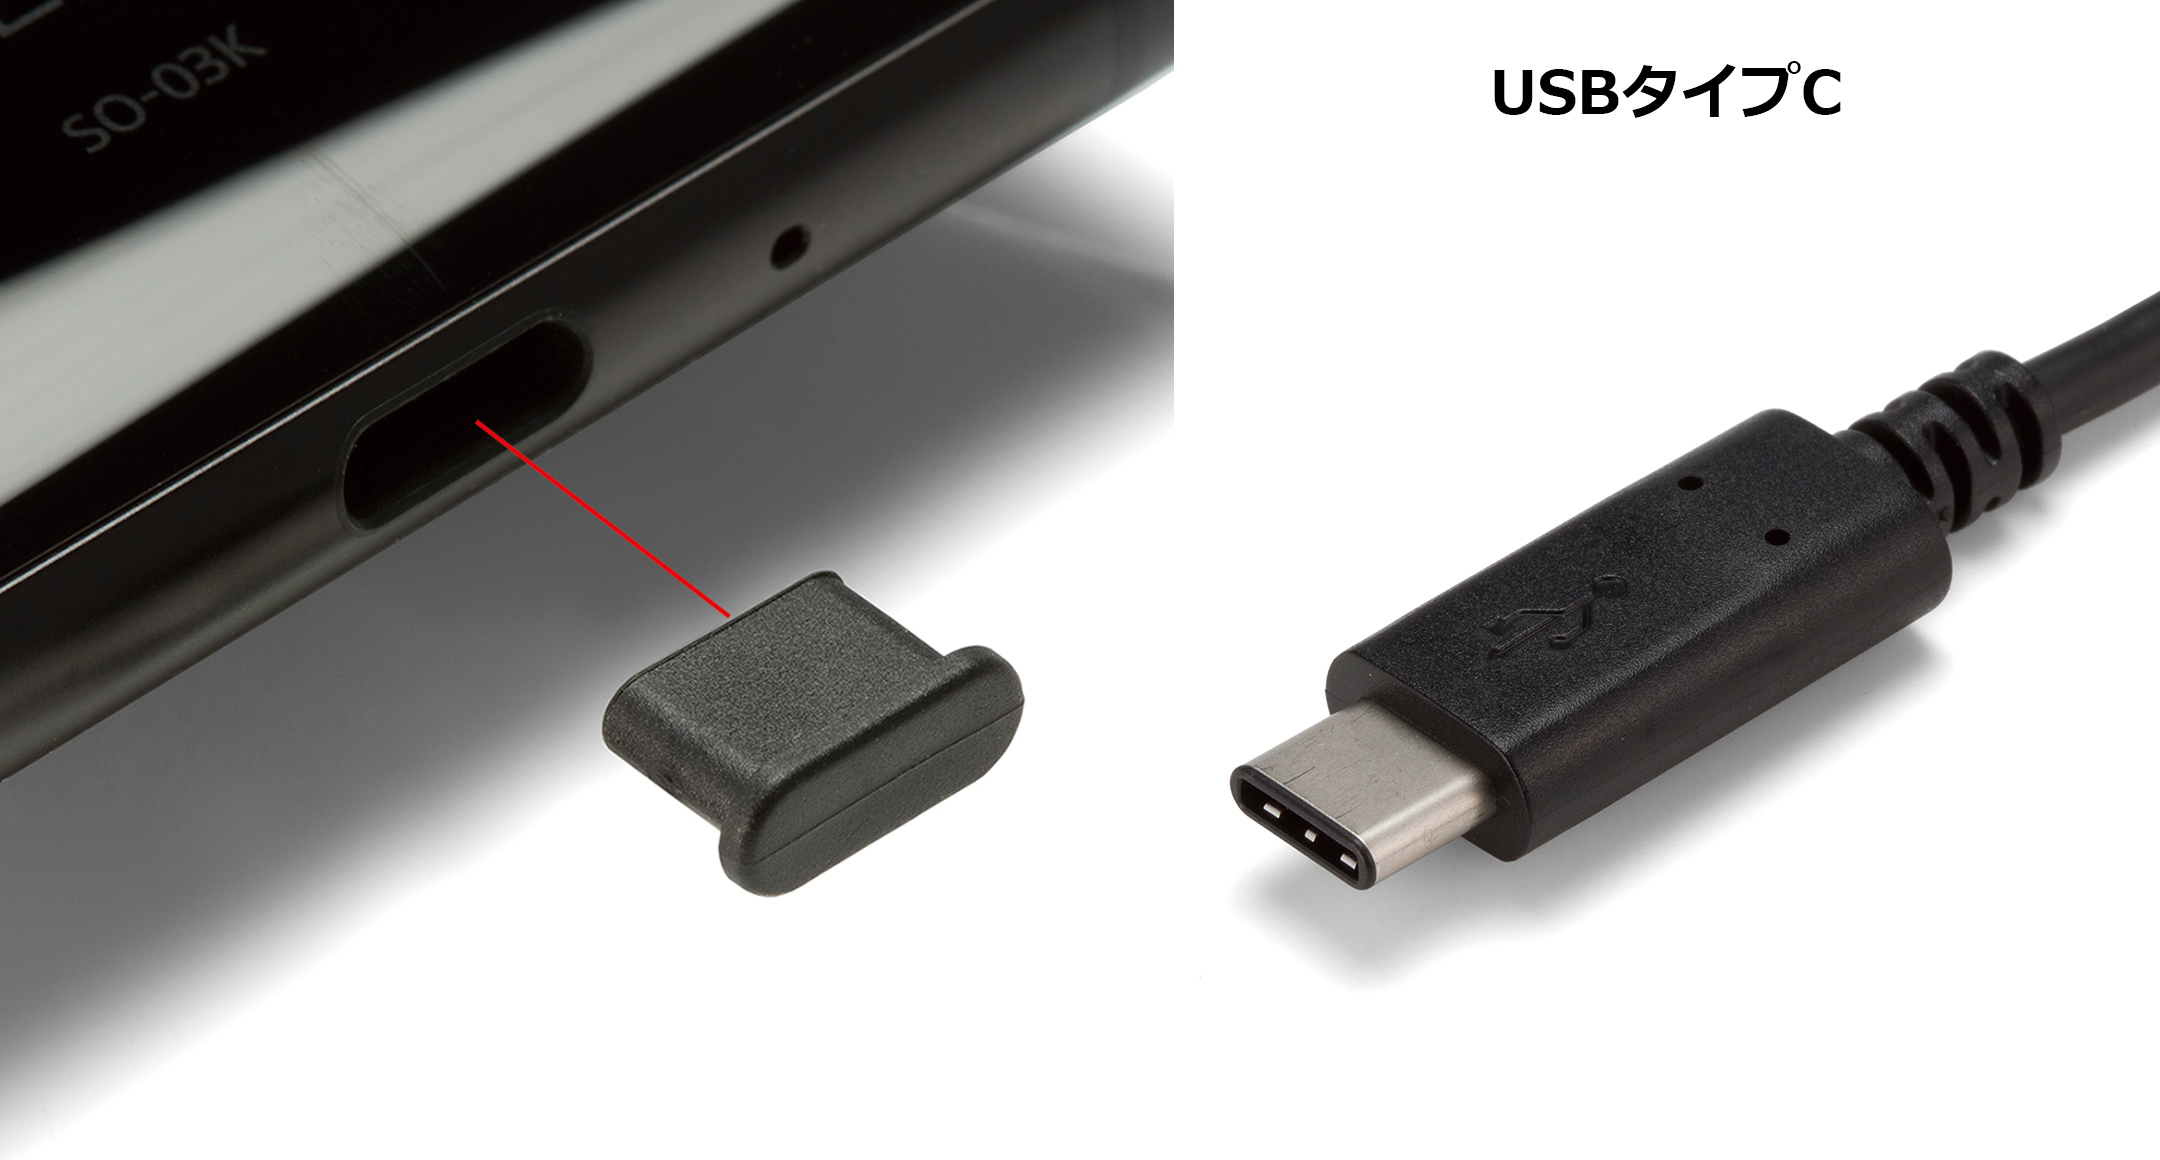 USBカバー・USB保護カバー USBCシリーズの画像